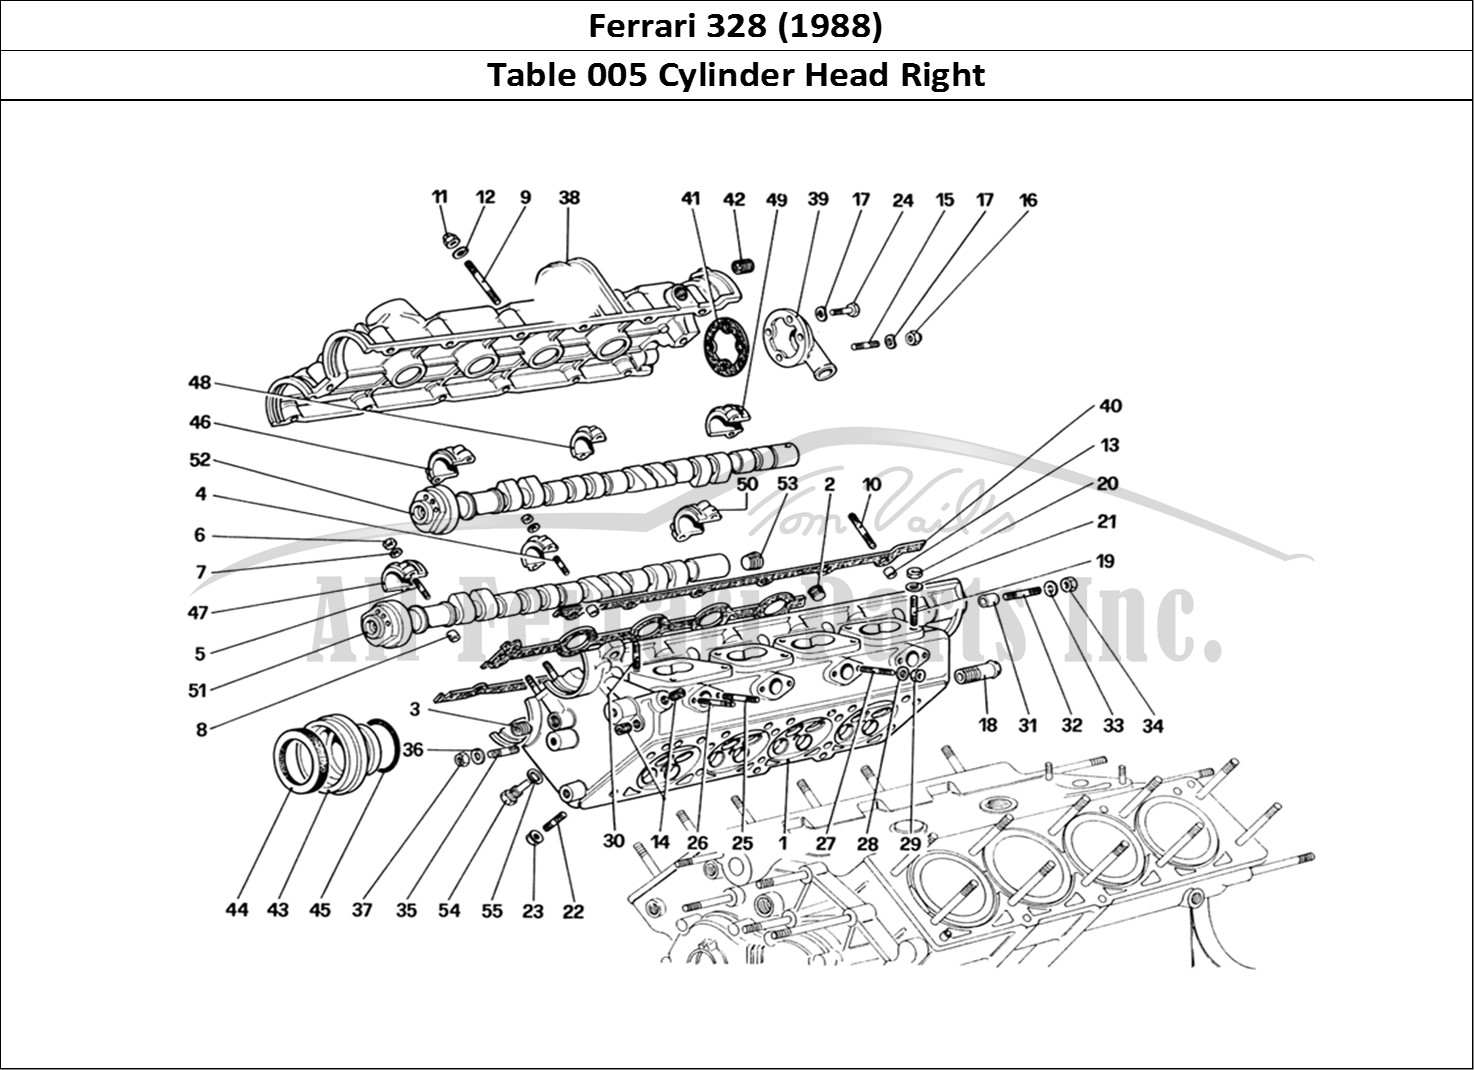 Ferrari Parts Ferrari 328 (1988) Page 005 Cylinder Head (Right)